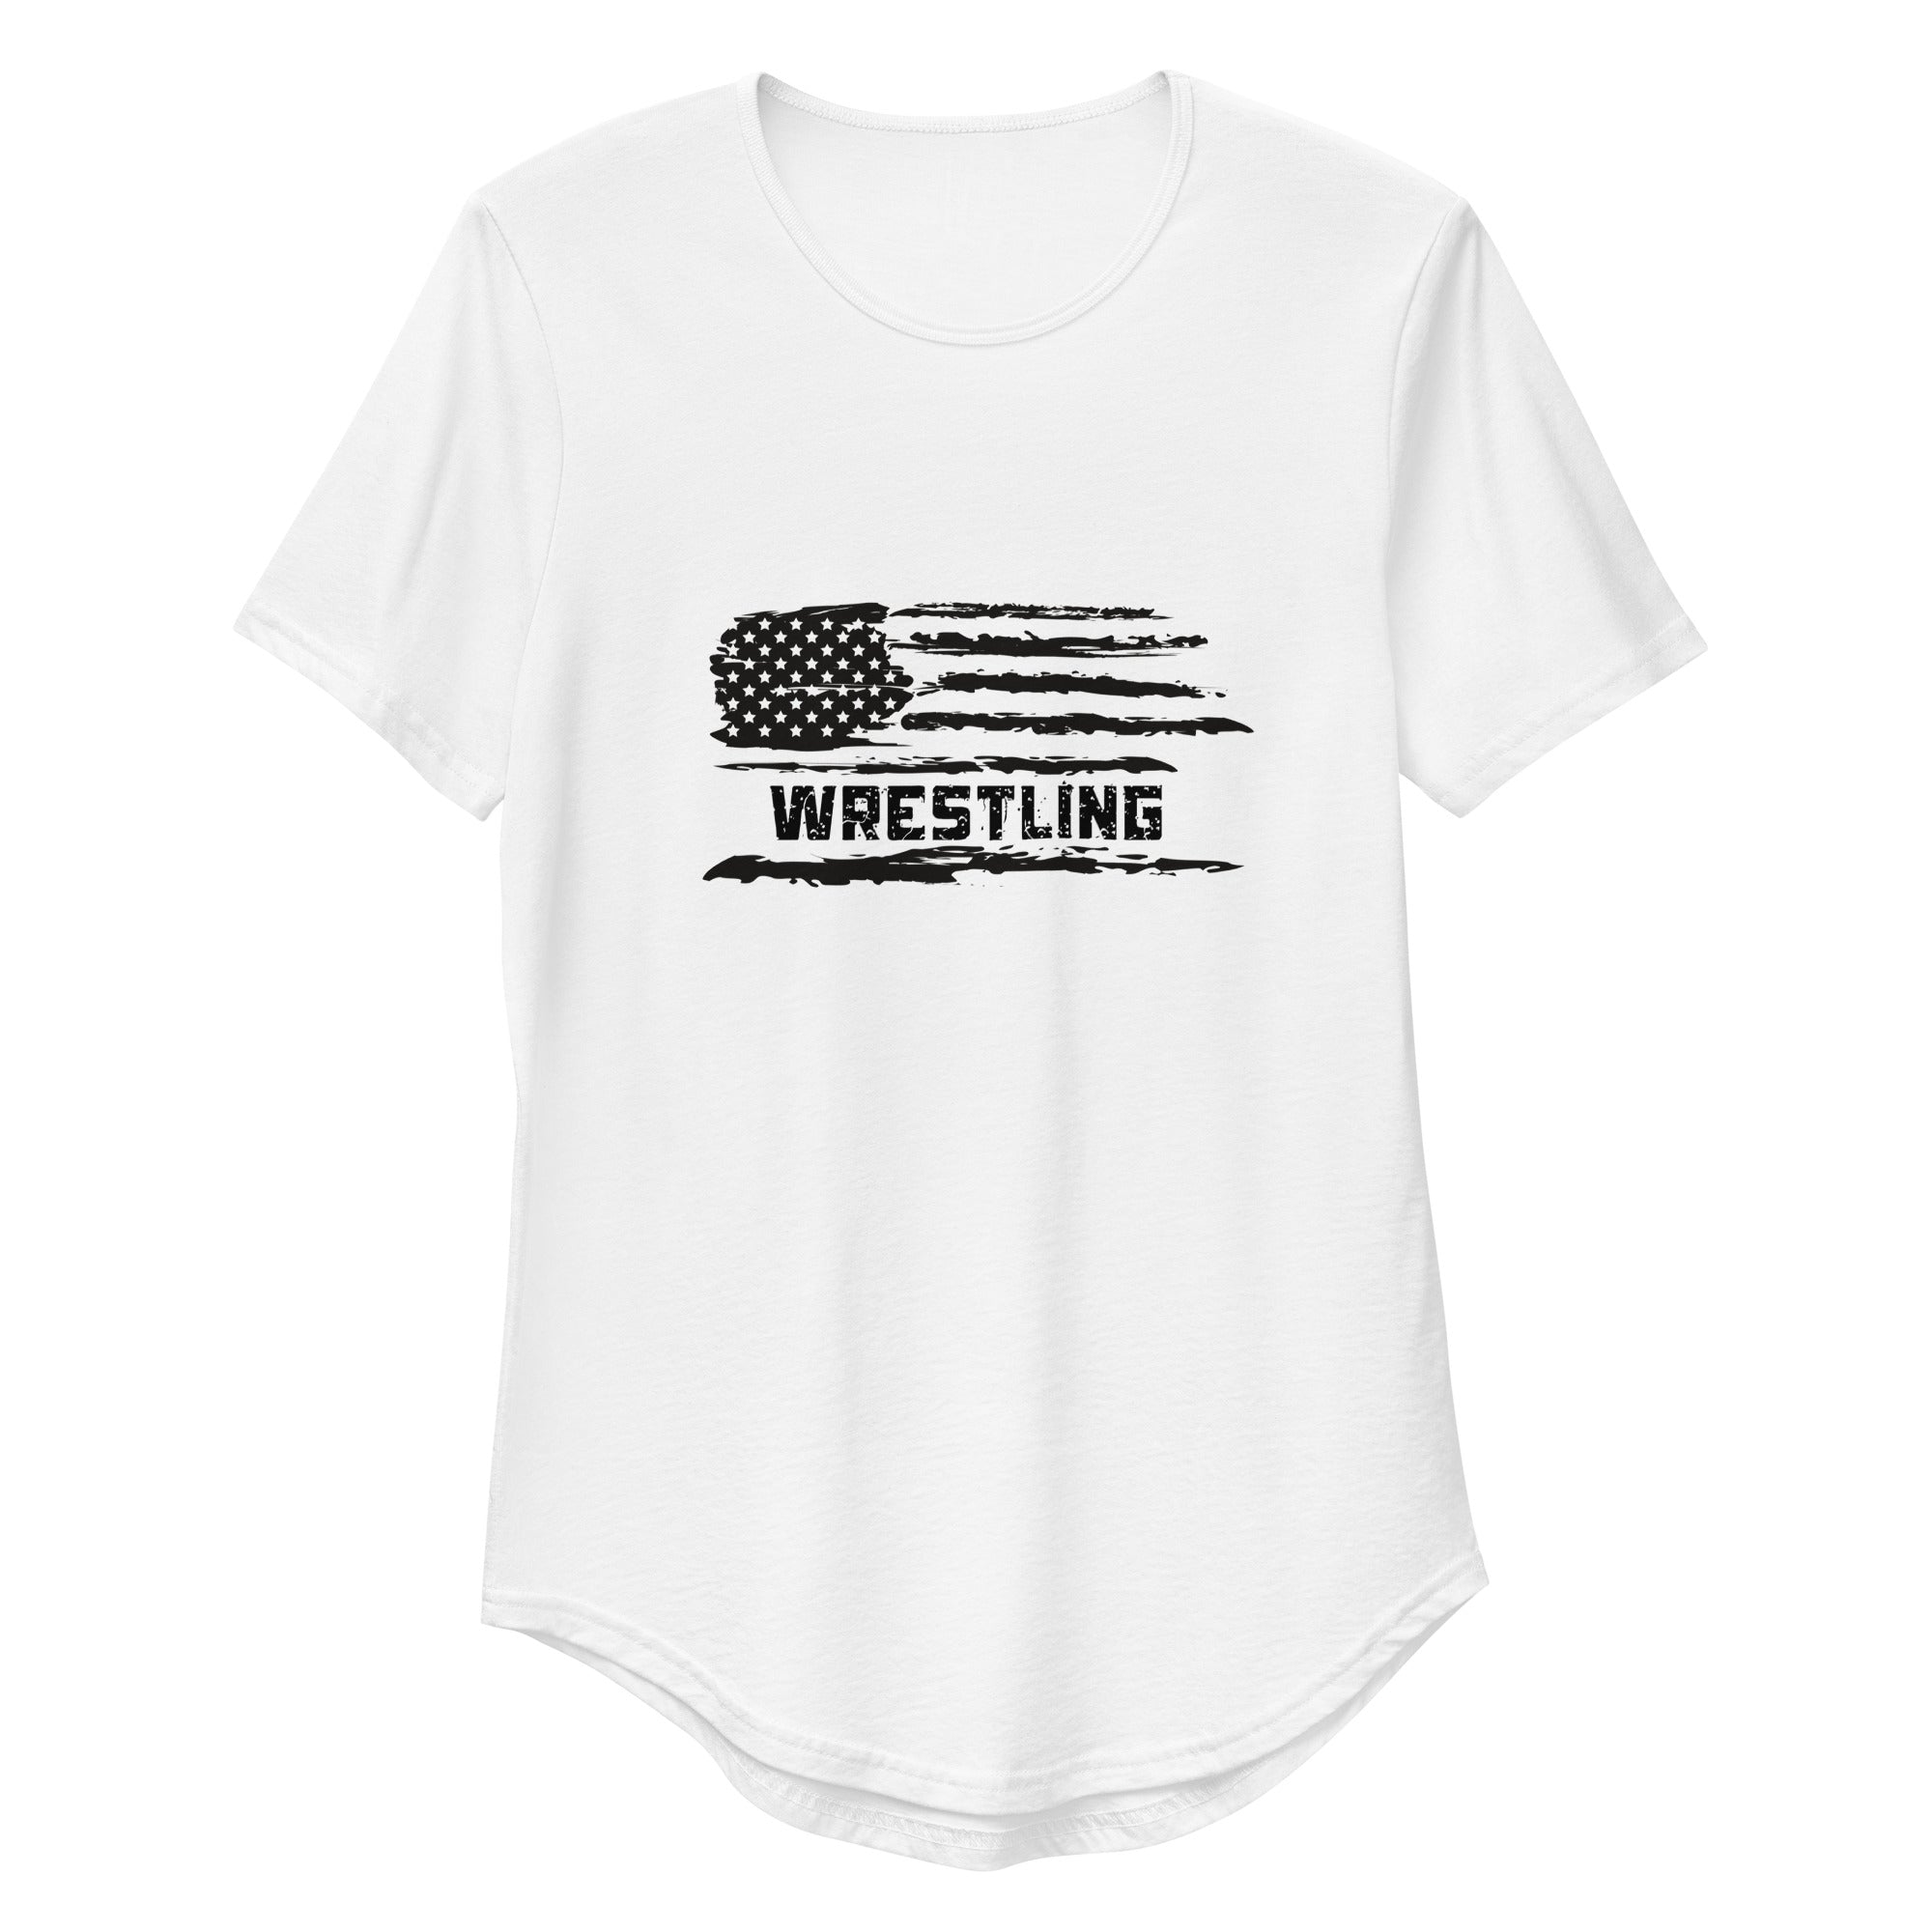 USA Distressed Flag Curved Hem T-Shirt Iron Fist Wrestling Men's Curved Hem T-Shirt